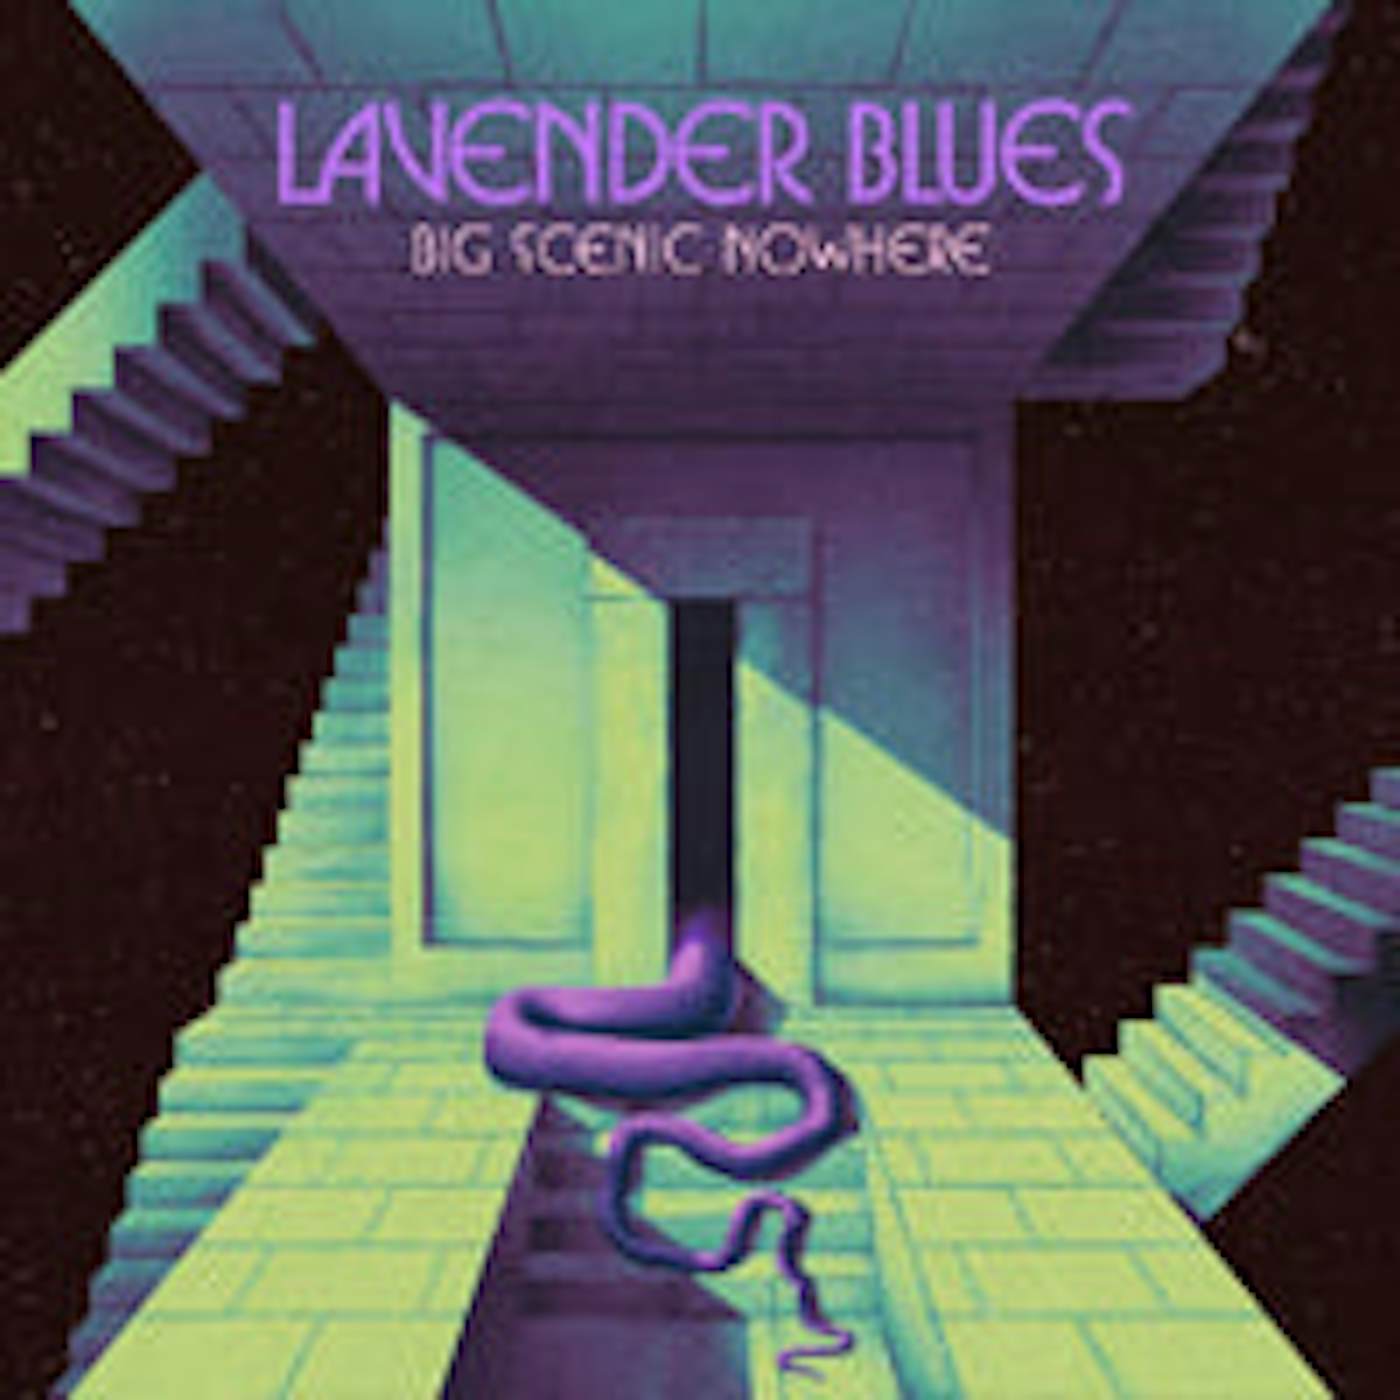 Big Scenic Nowhere LP - Lavender Blues (Vinyl)